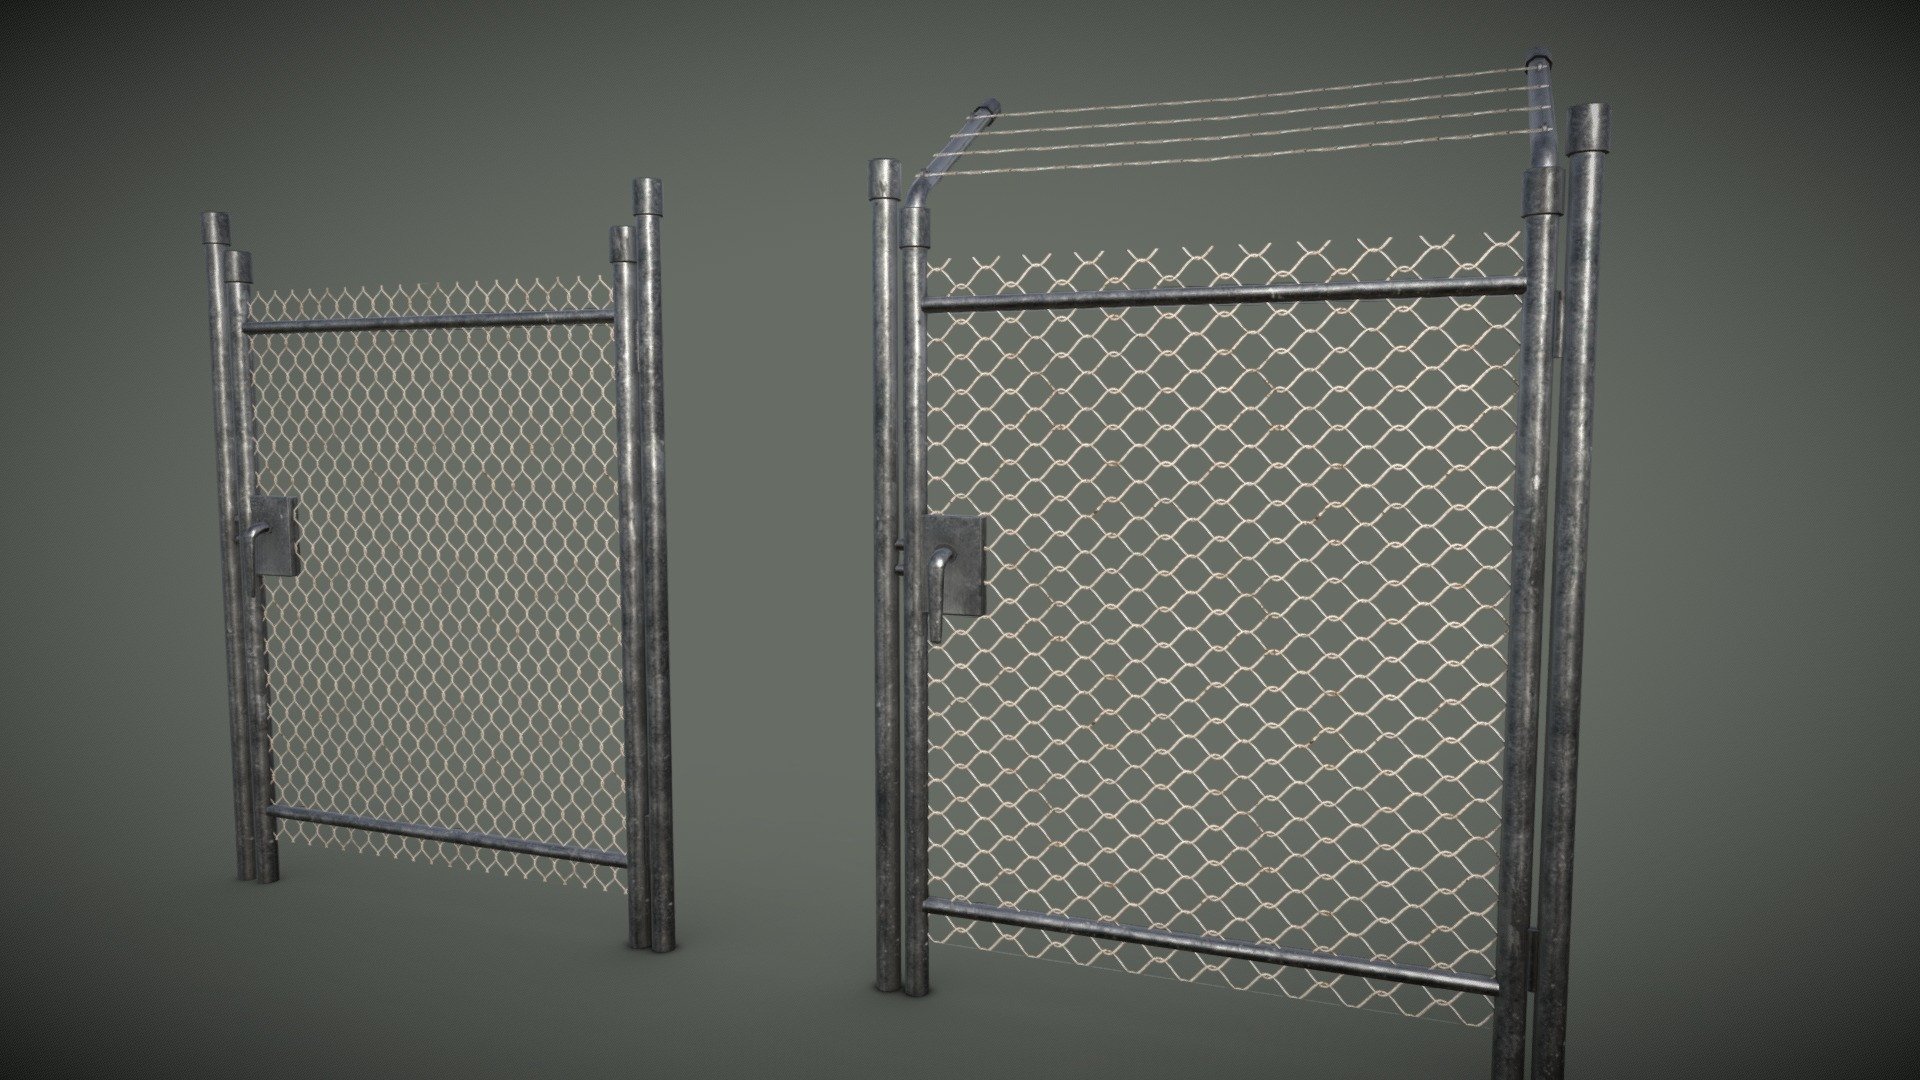 metal mesh gates 1 gates Polygons 729 Vertices 747

2 gates Polygons 487 Vertices 485 - metal mesh gates Low-poly 3D model - Buy Royalty Free 3D model by Svetlana07 3d model